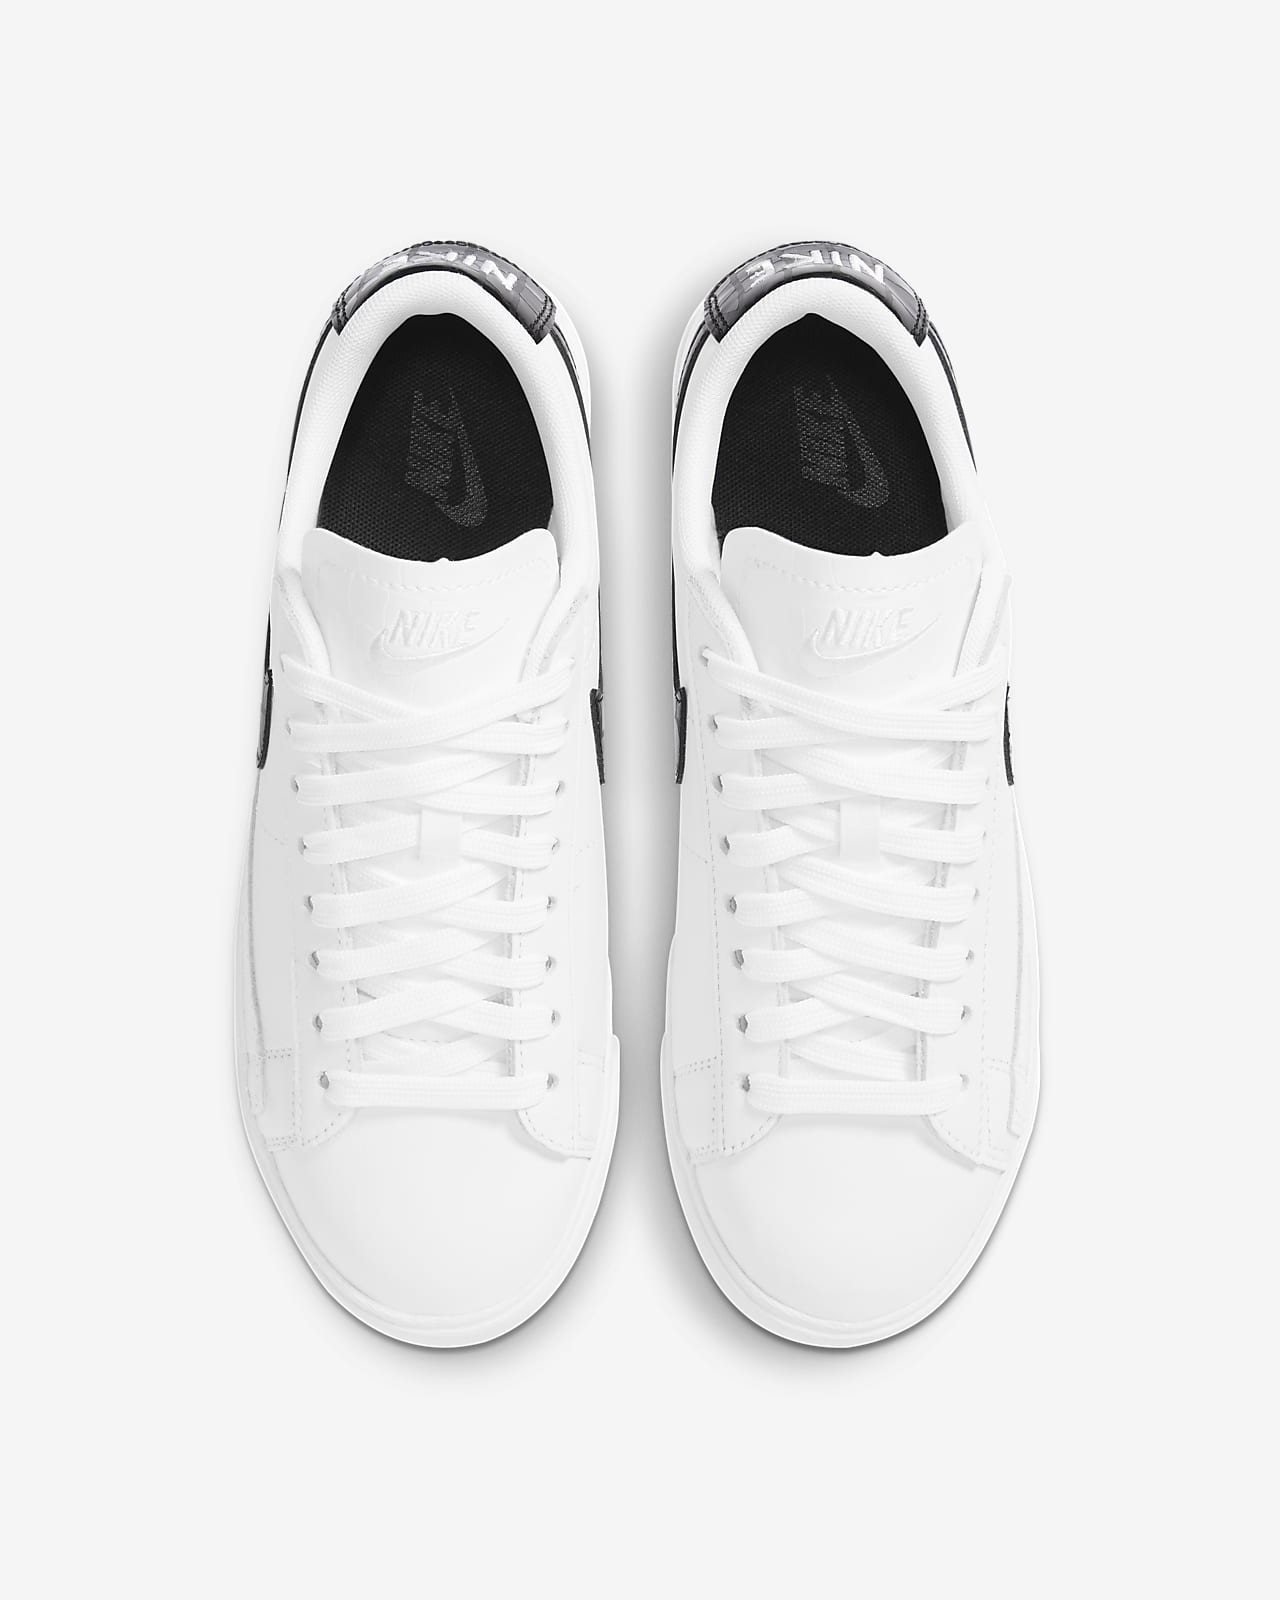 nike blazer sneakers in white and black